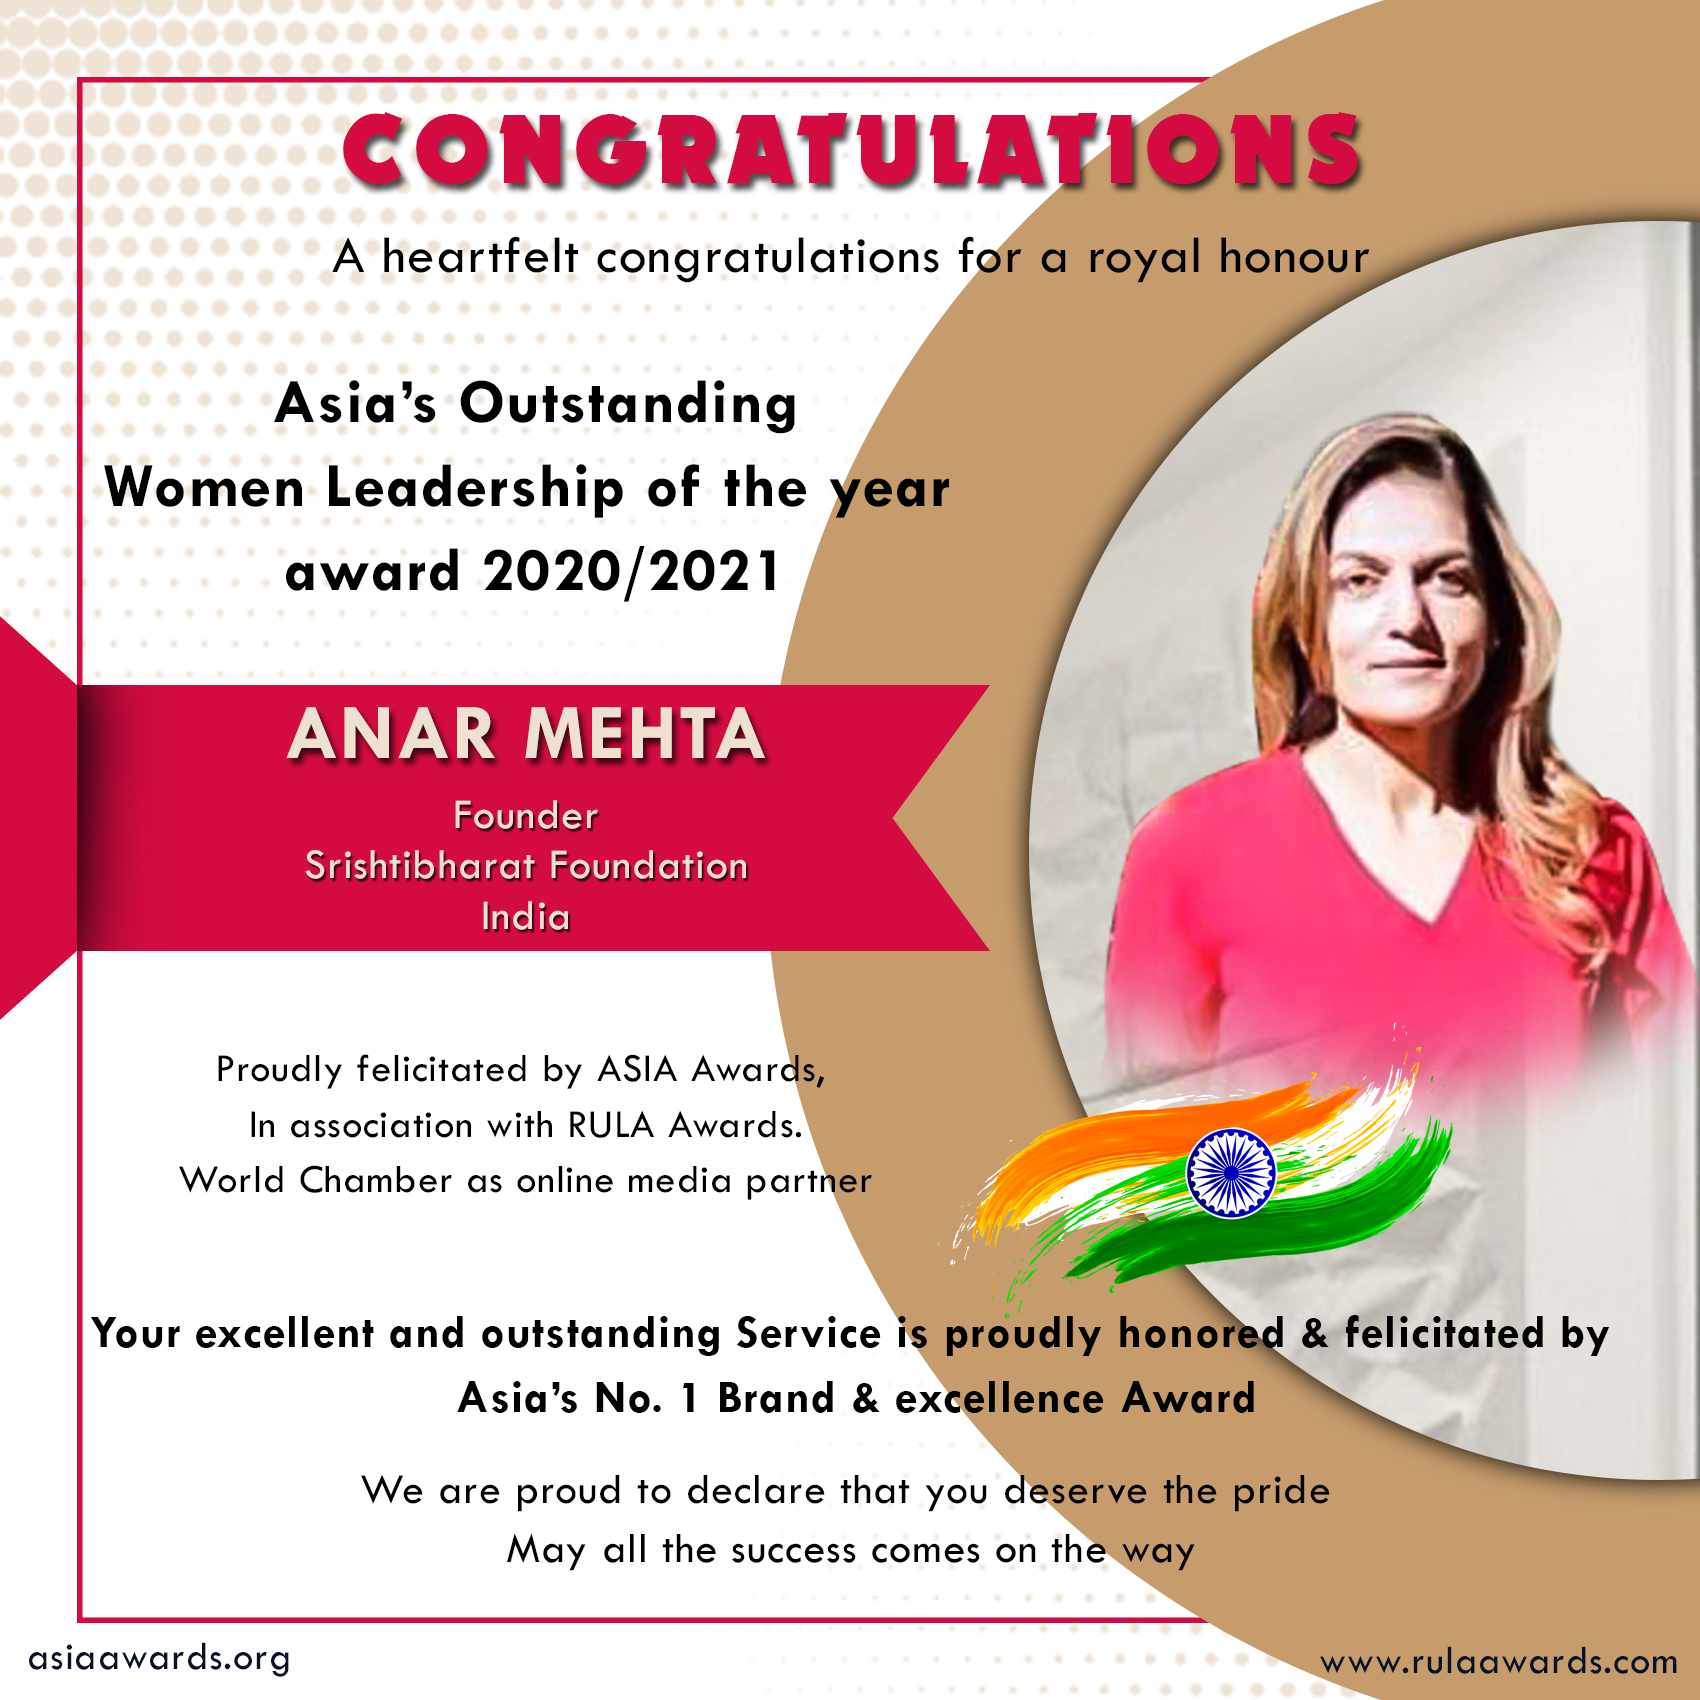 Anar Mehta has bagged Asia's Outstanding Women Leadership Award